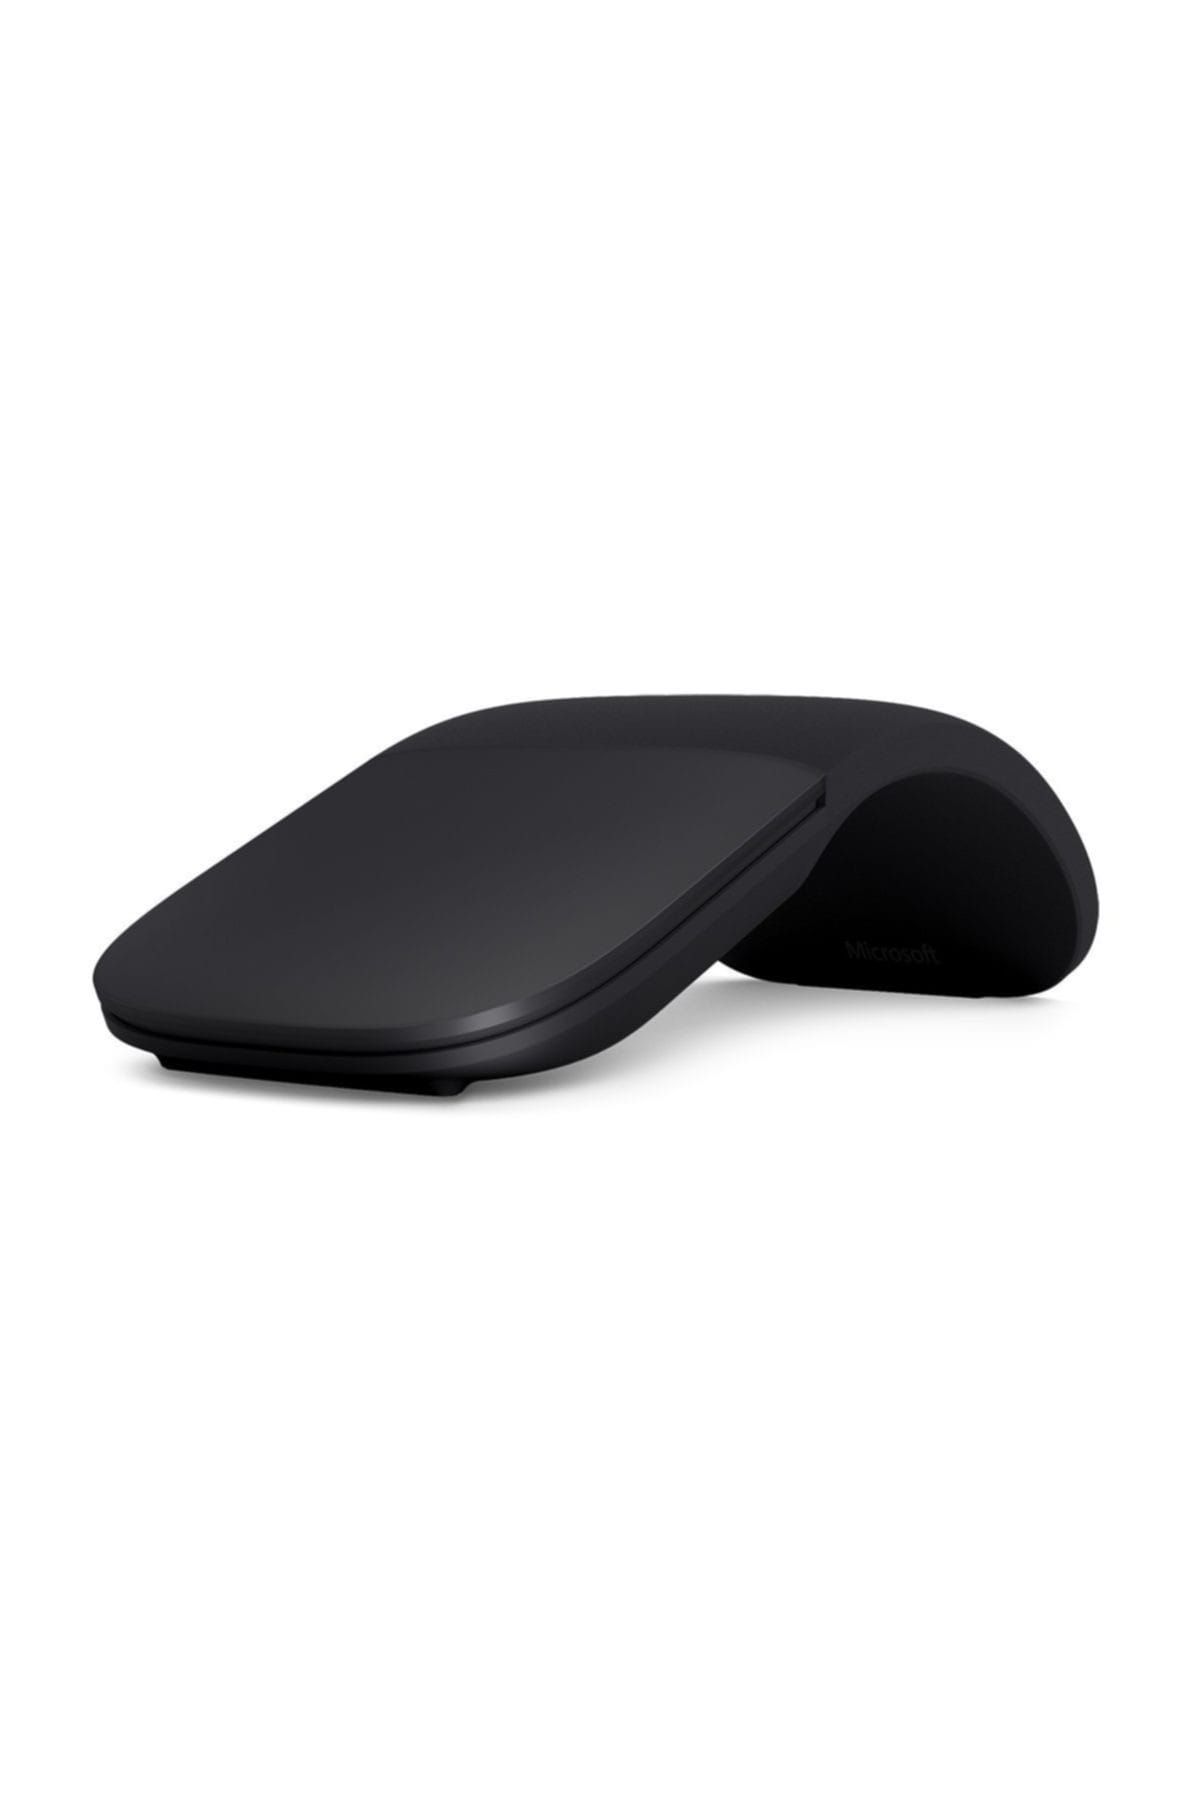 Microsoft Microsoft Arc Bluetooth Mouse Elg-00012 Siyah